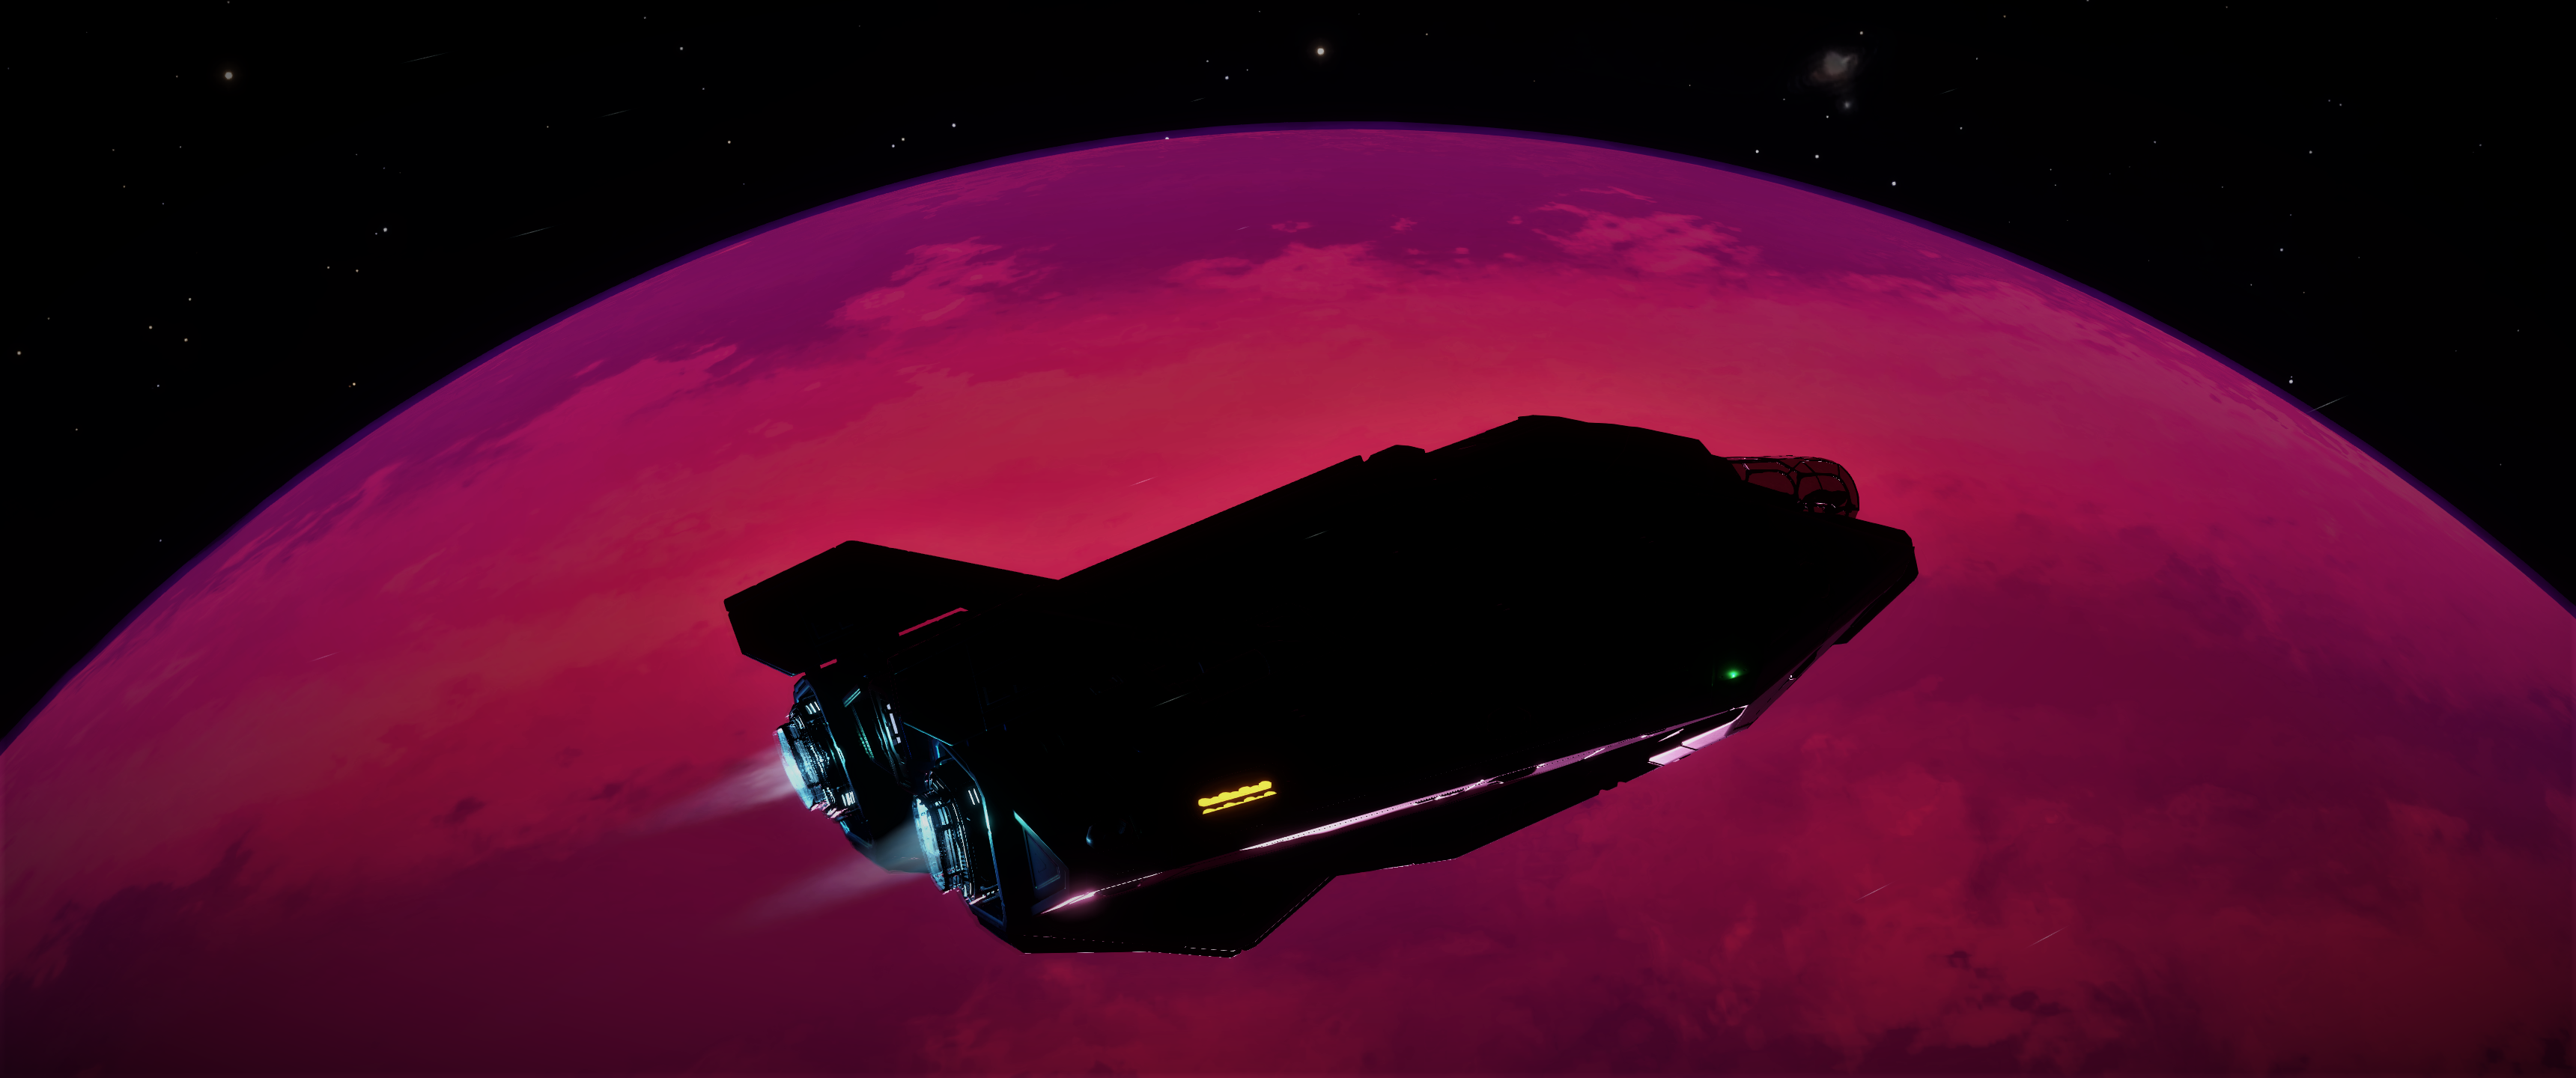 General 3440x1440 Elite: Dangerous ASP Explorer dark space red pink screen shot spaceship science fiction video games Frontier Developments